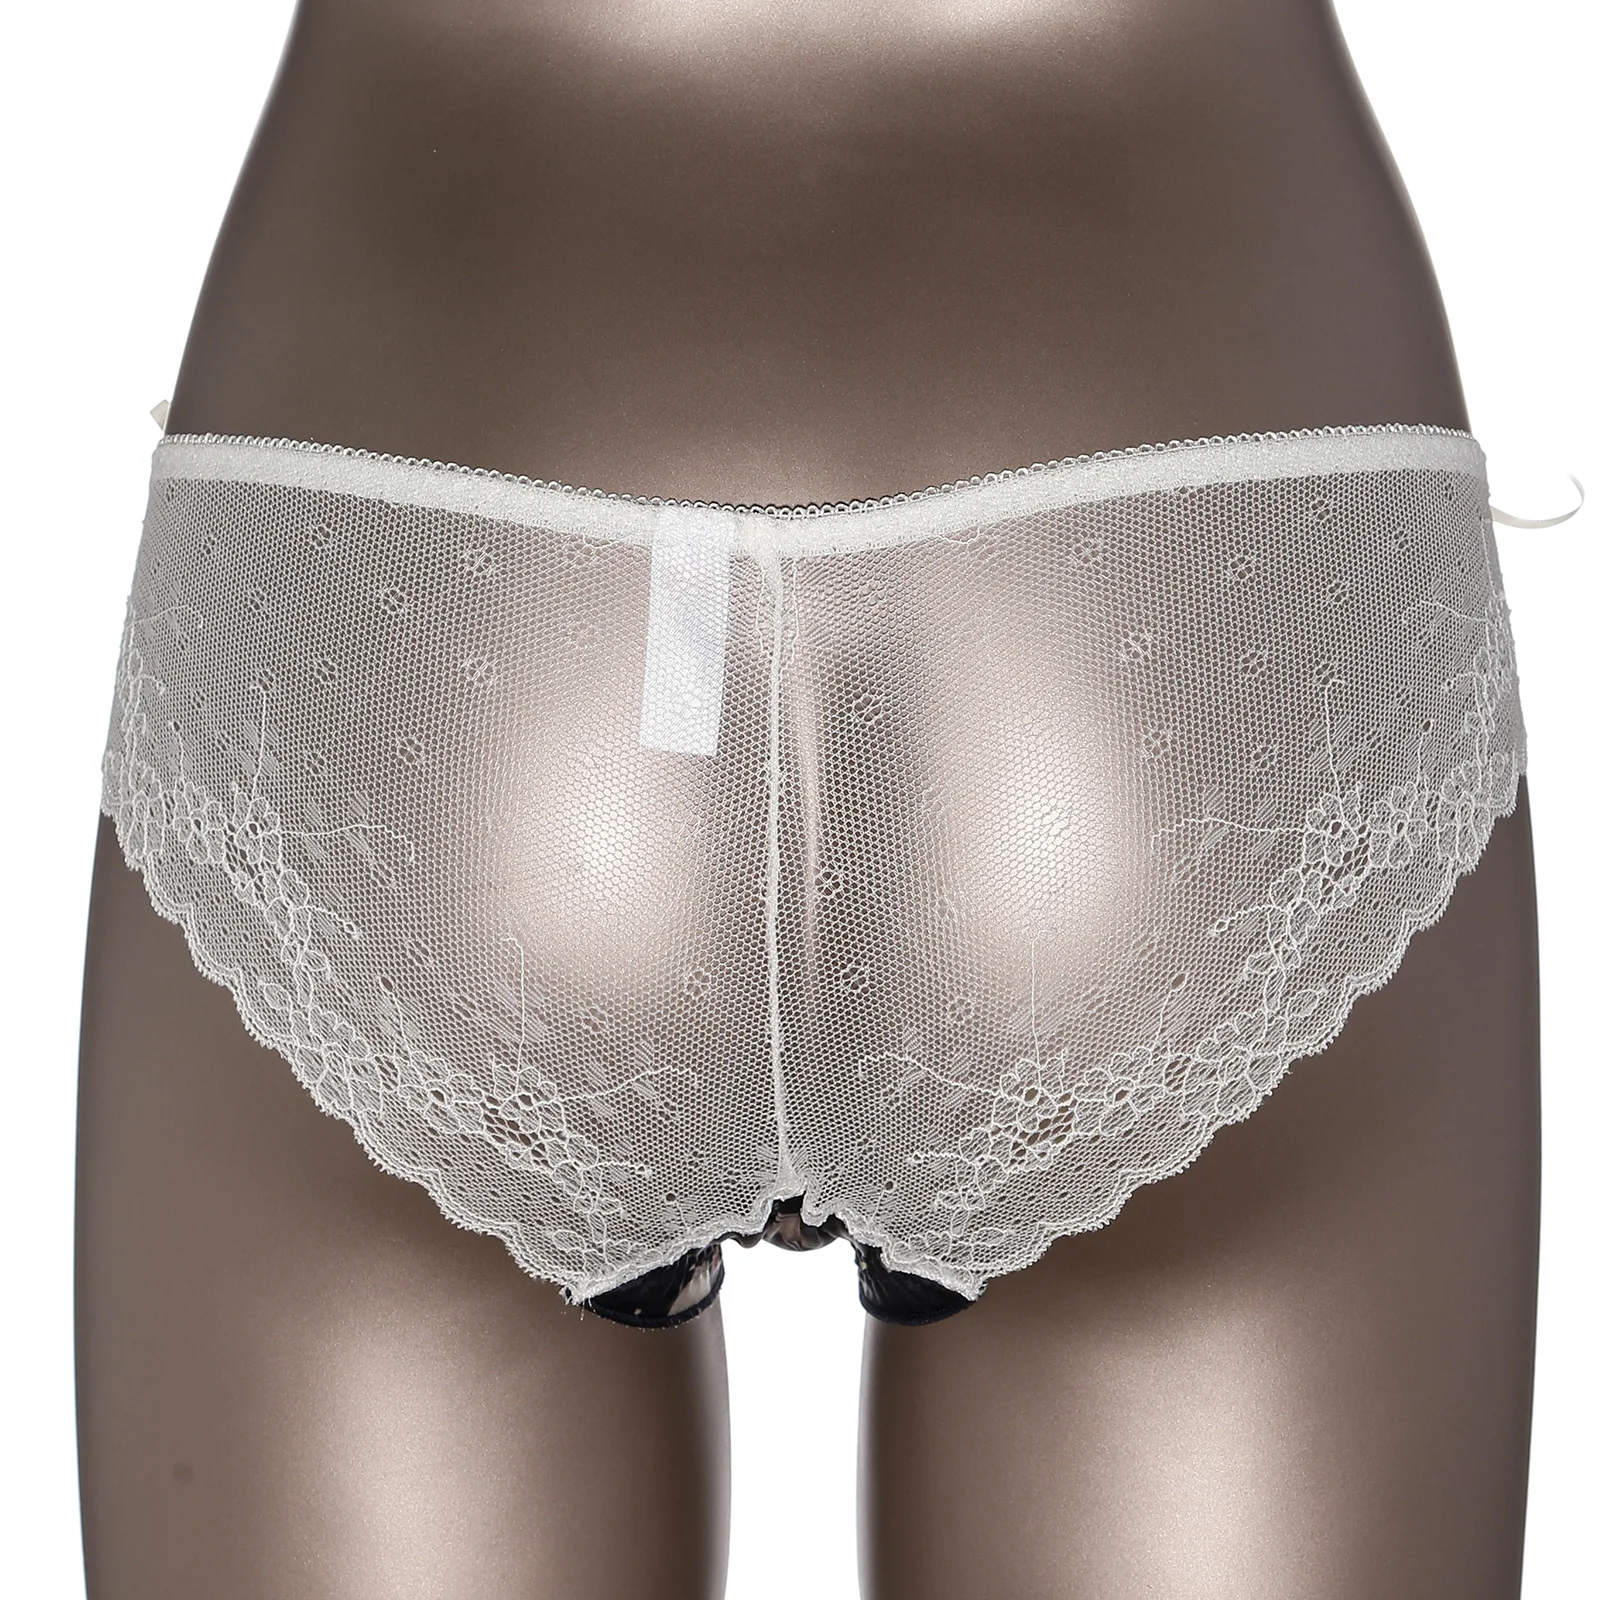 Mens Erotic Lingerie Sissy Gay Underwear Bowknot See-through Lace Back Briefs Panties Adorned Print Elastic Waistband Underpants joe boxer underwear